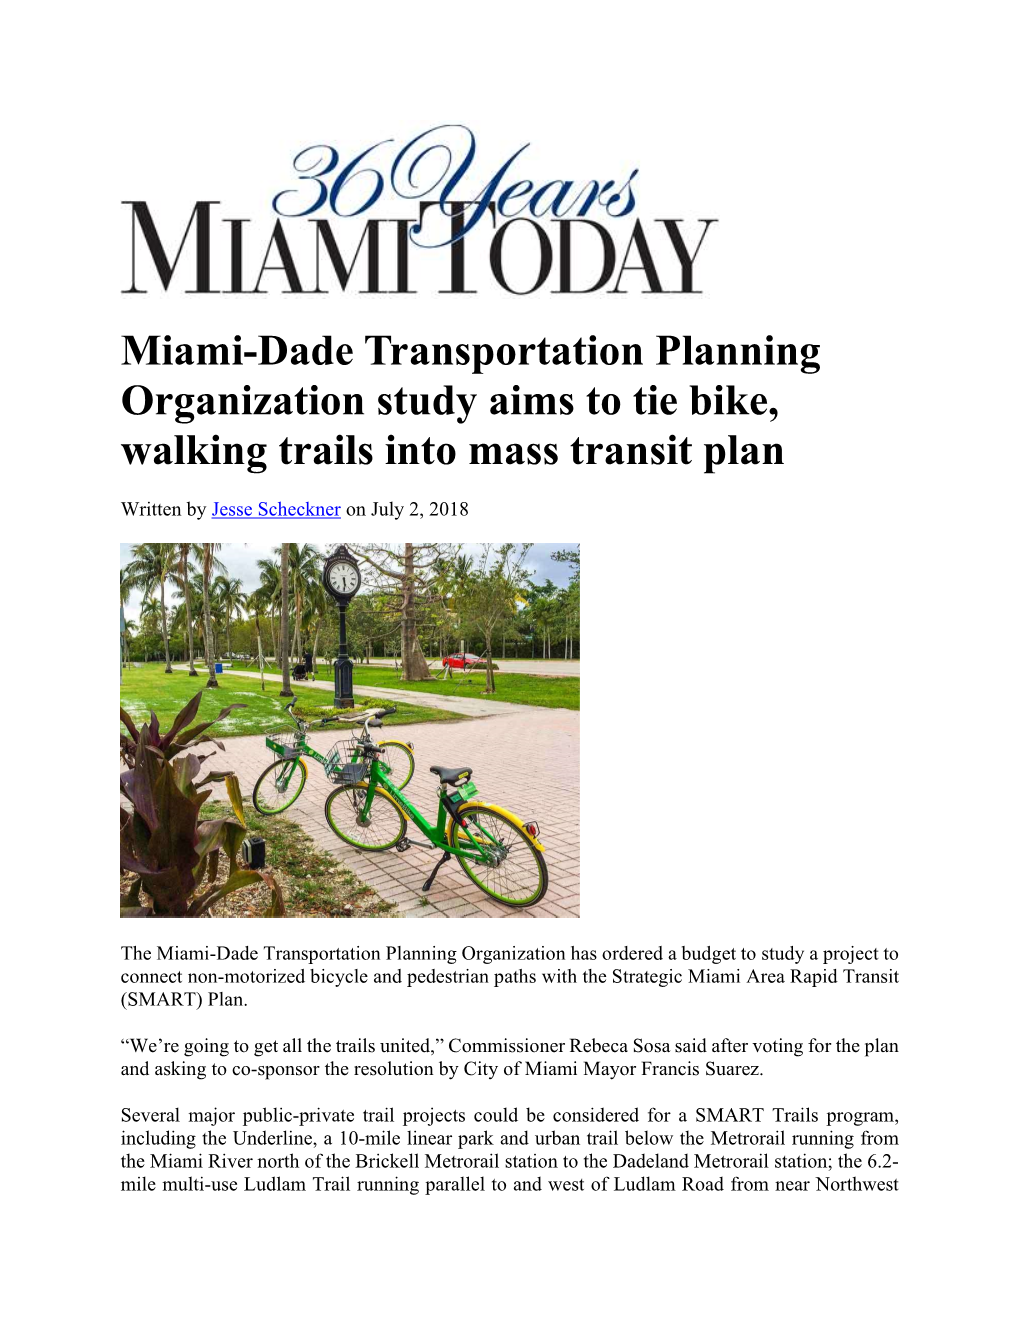 Miami-Dade Transportation Planning Organization Study Aims to Tie Bike, Walking Trails Into Mass Transit Plan